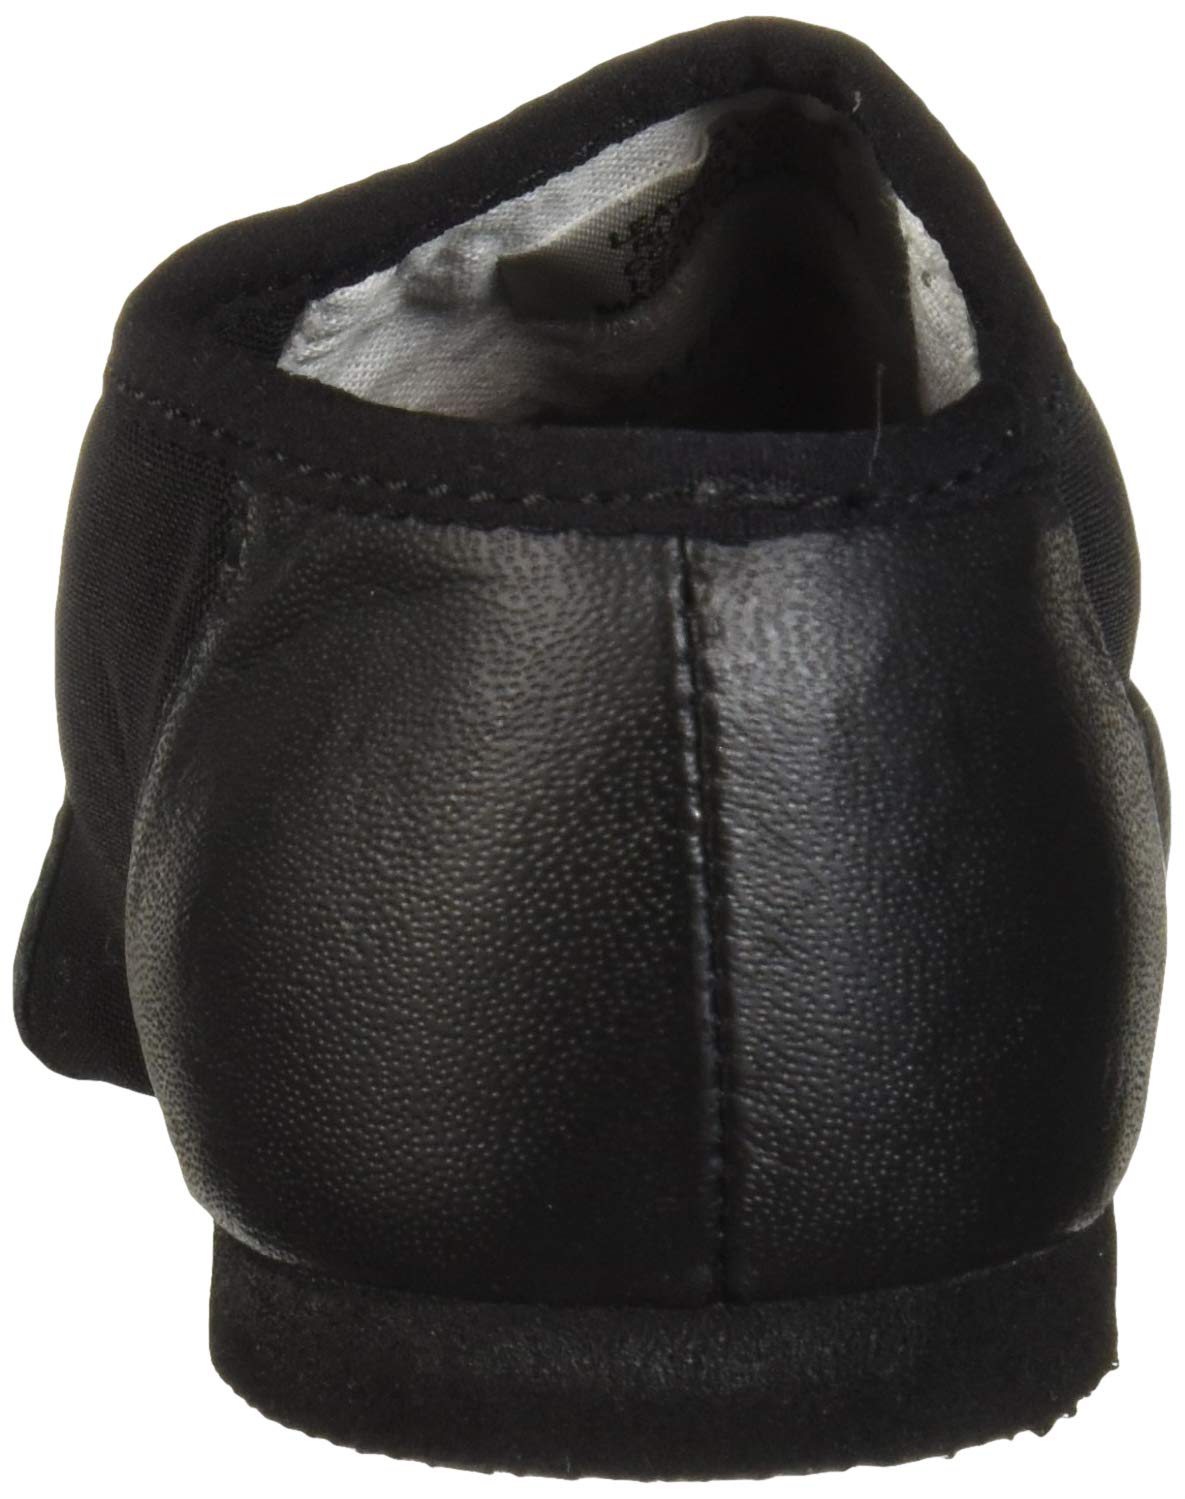 Bloch Dance Girl's Neo-Flex Leather and Neoprene Slip On Split Sole Jazz Shoe